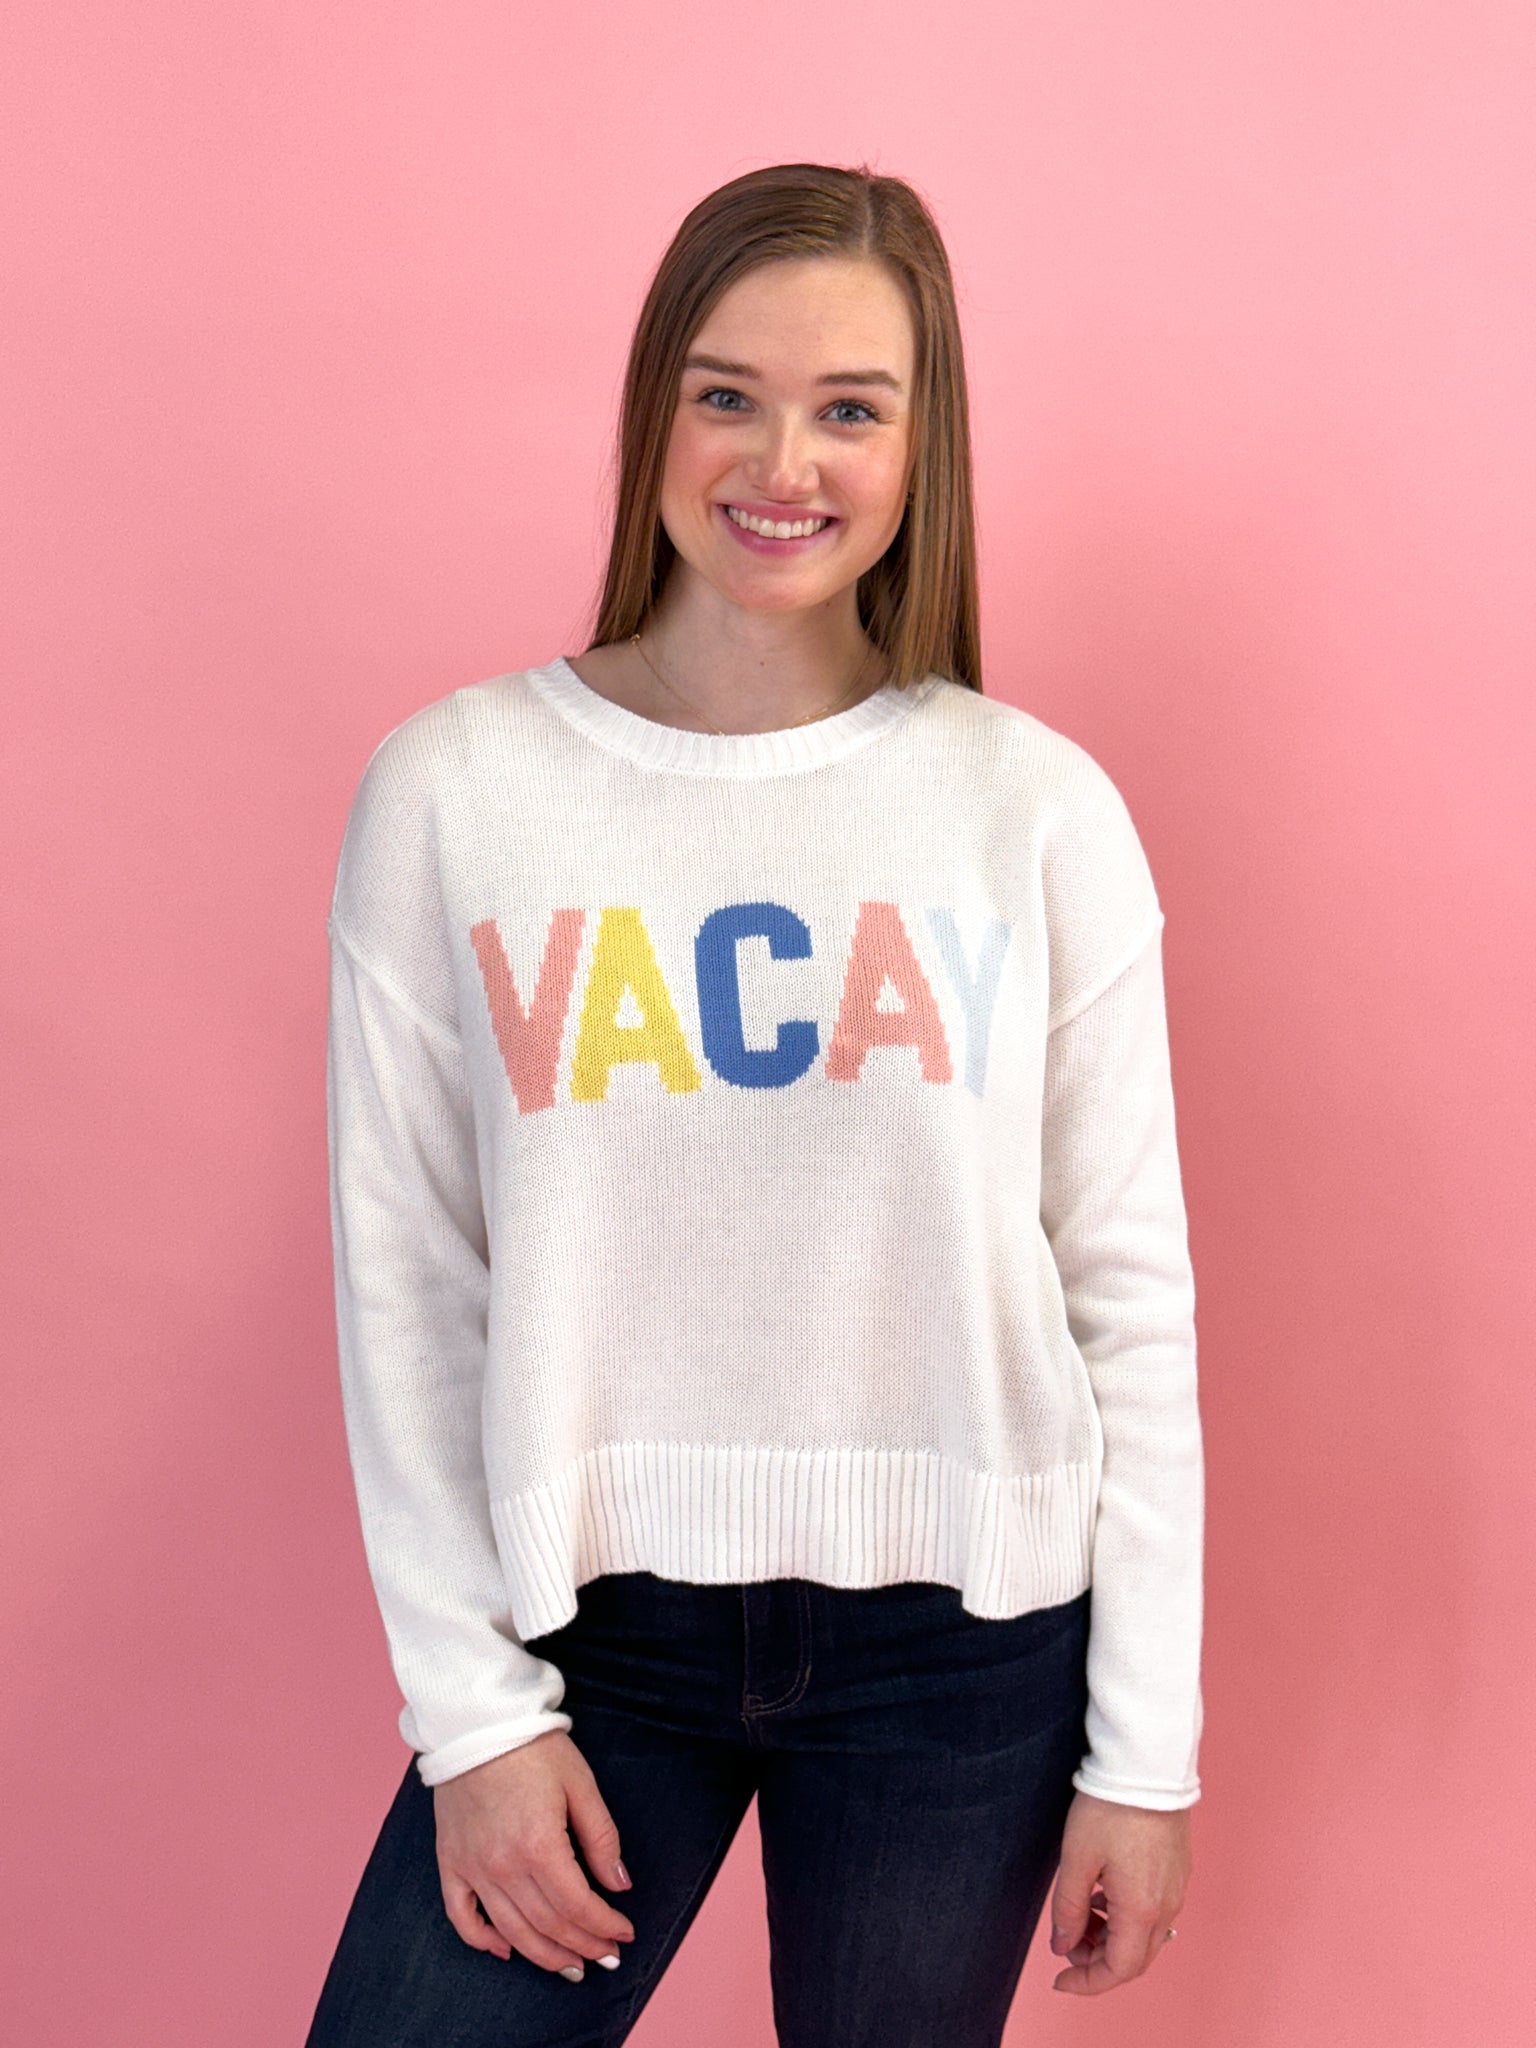 Z Supply Sienna Vacay Sweater